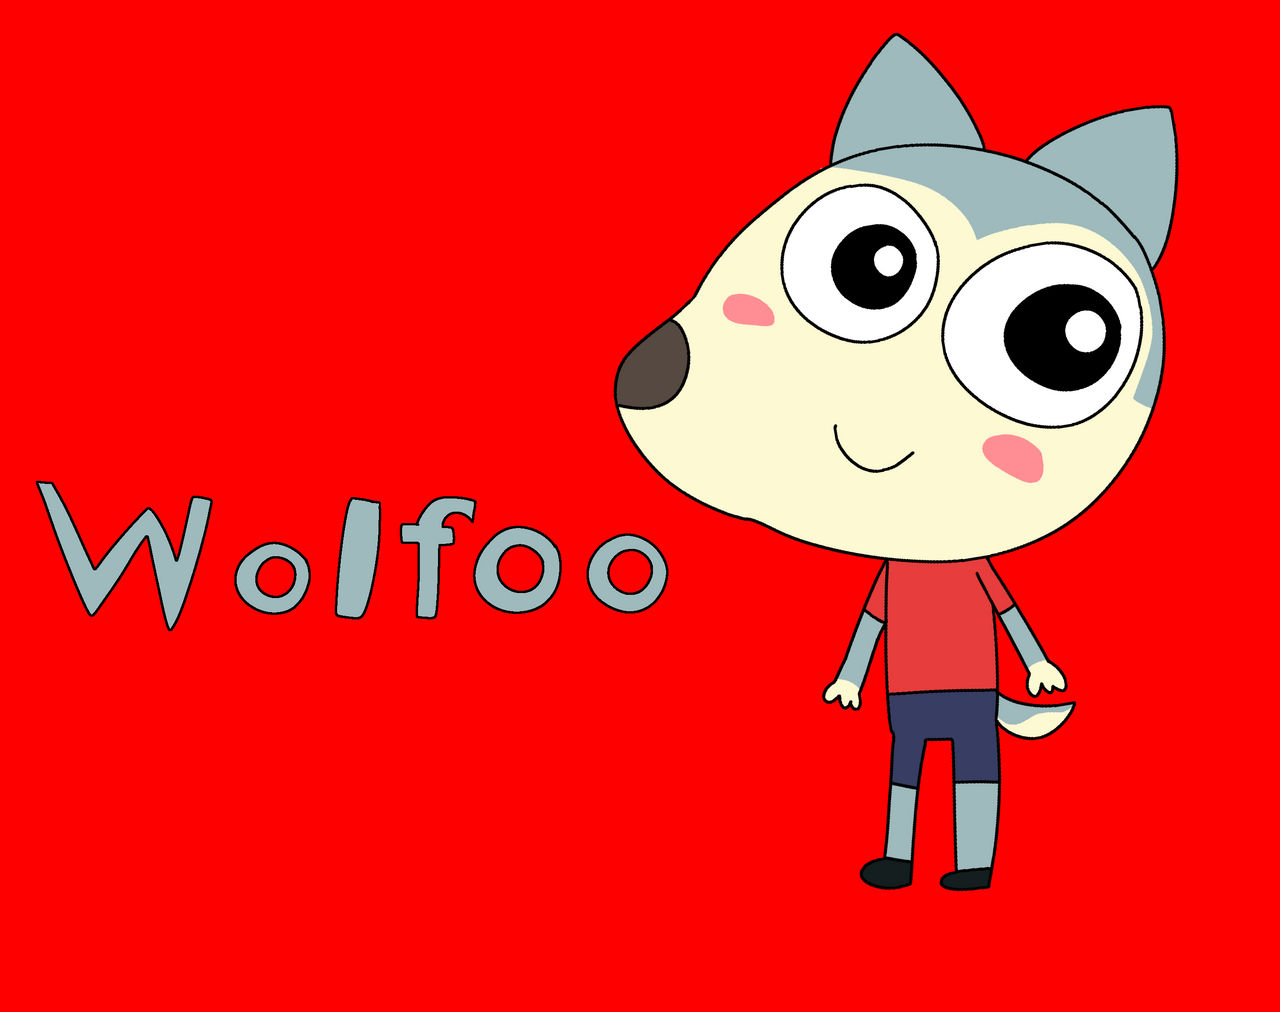 Wolfoo by Awesomesuzy11 on DeviantArt